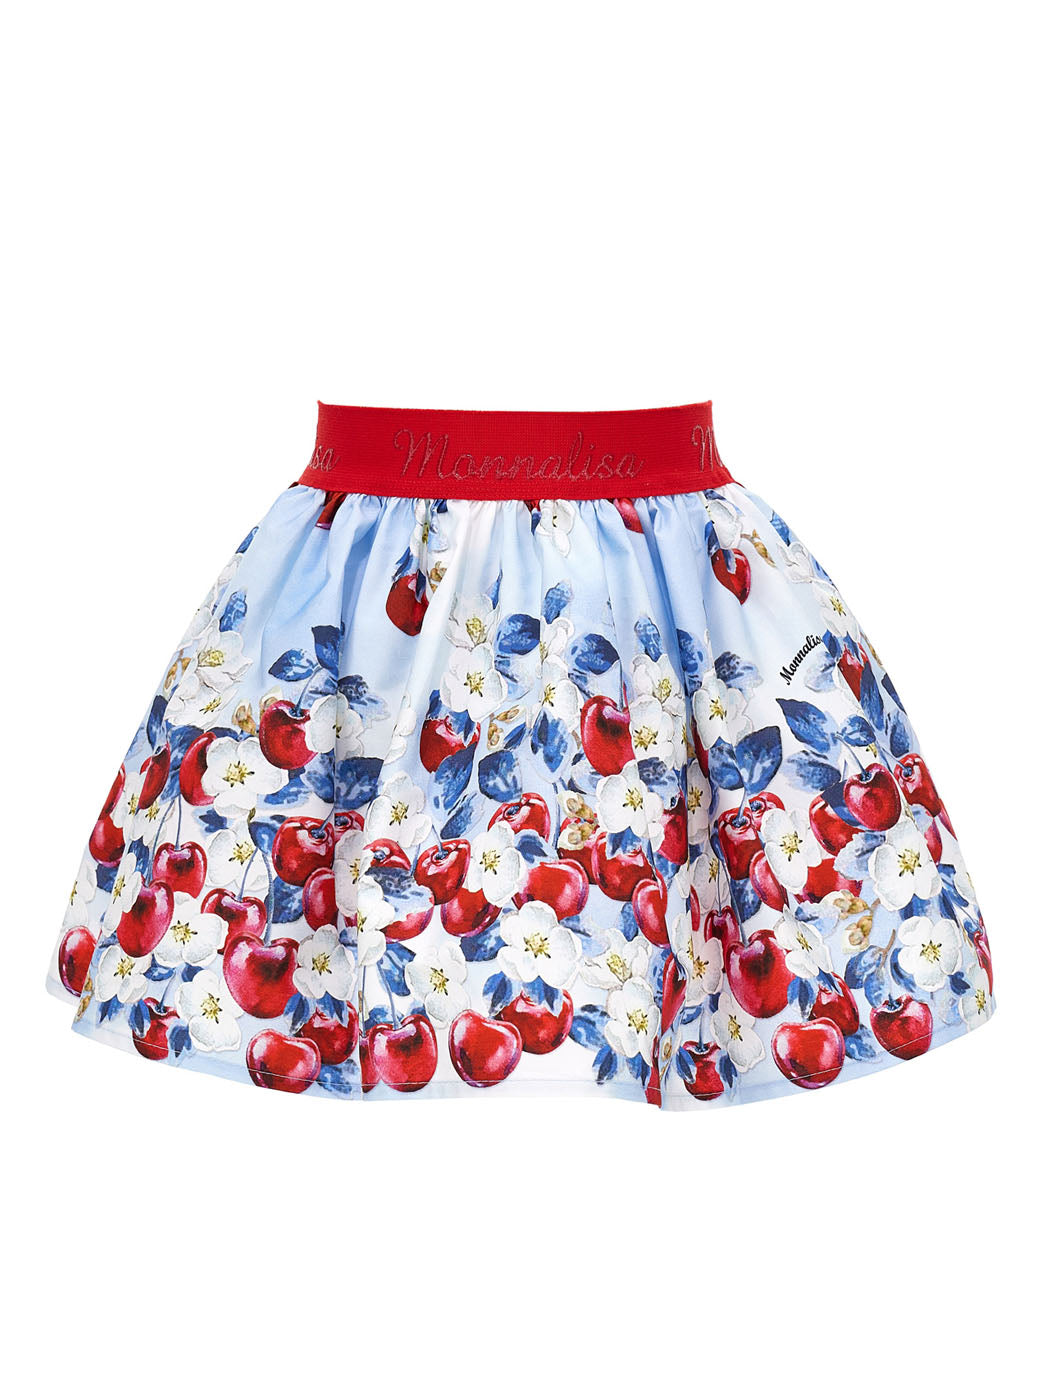 MONNALISA Cherry print cotton skirt